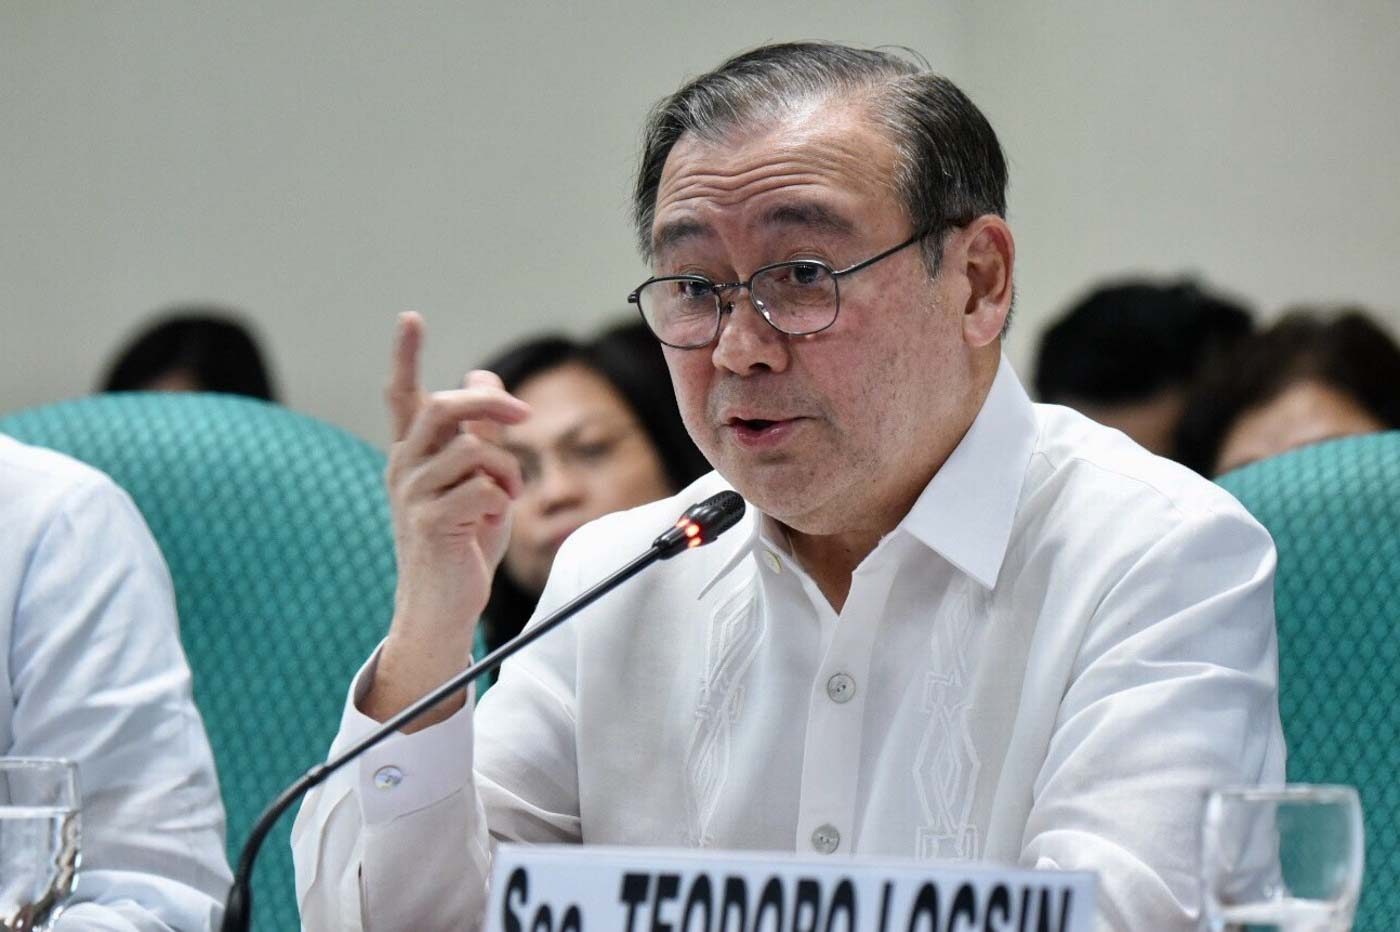 ‘Good move’: Locsin hails Duterte’s threats to scrap VFA